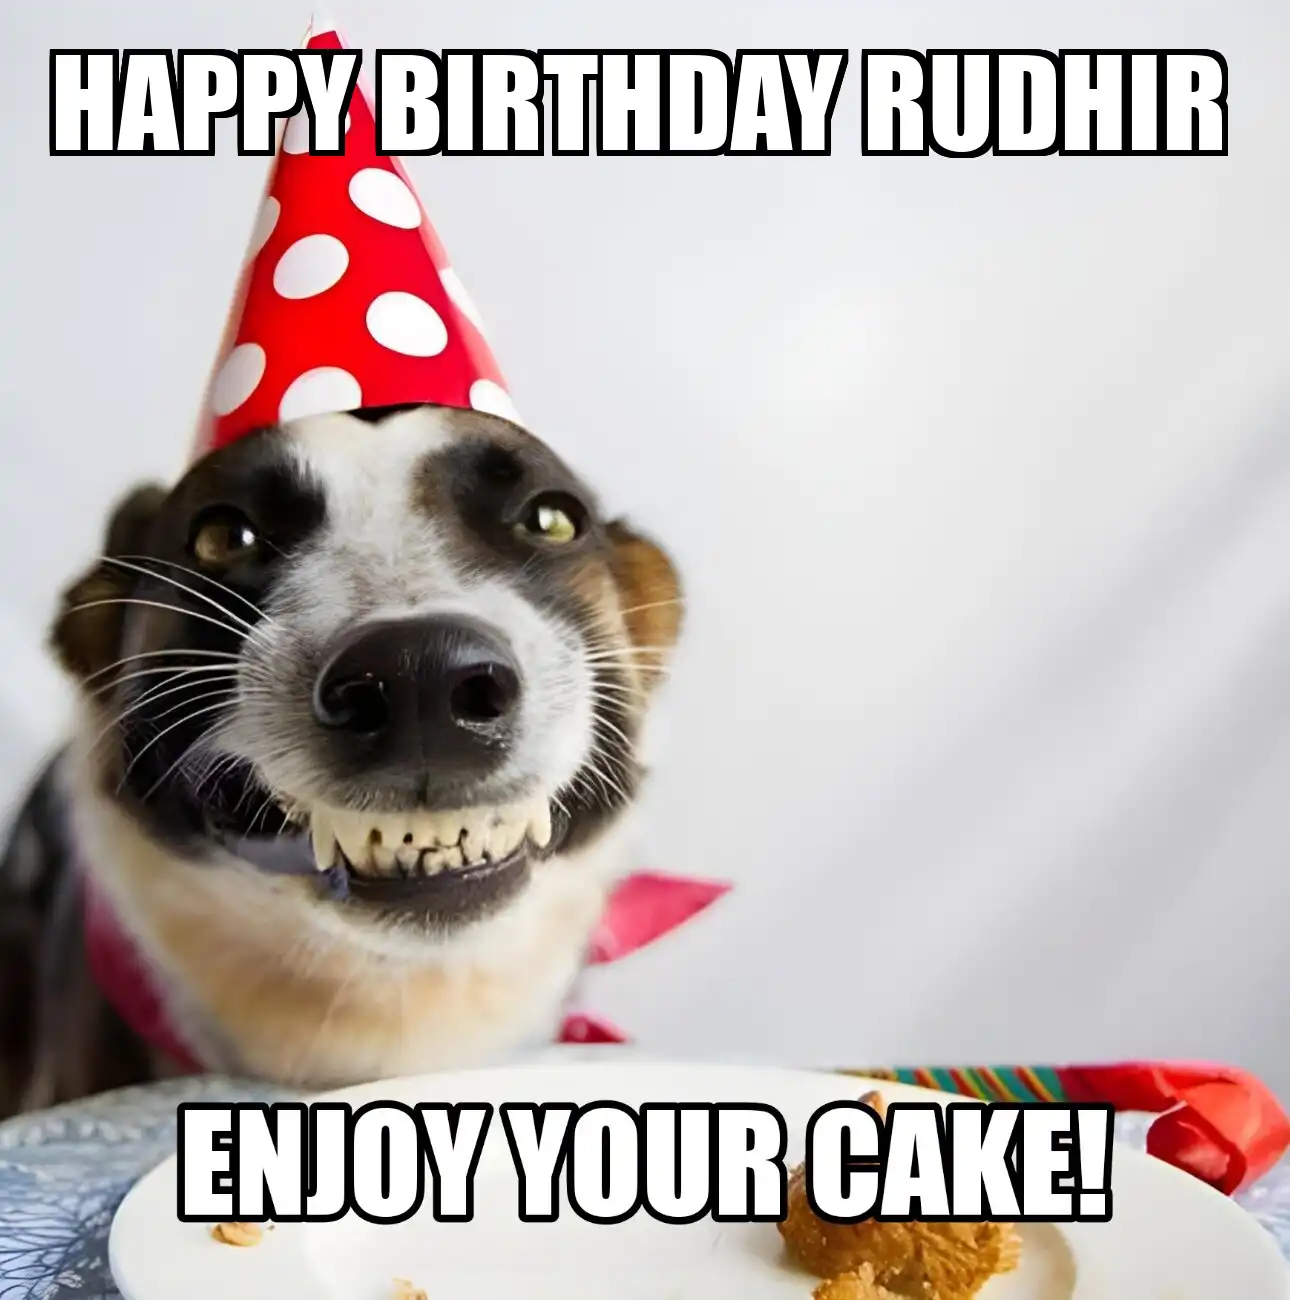 Happy Birthday Rudhir Enjoy Your Cake Dog Meme